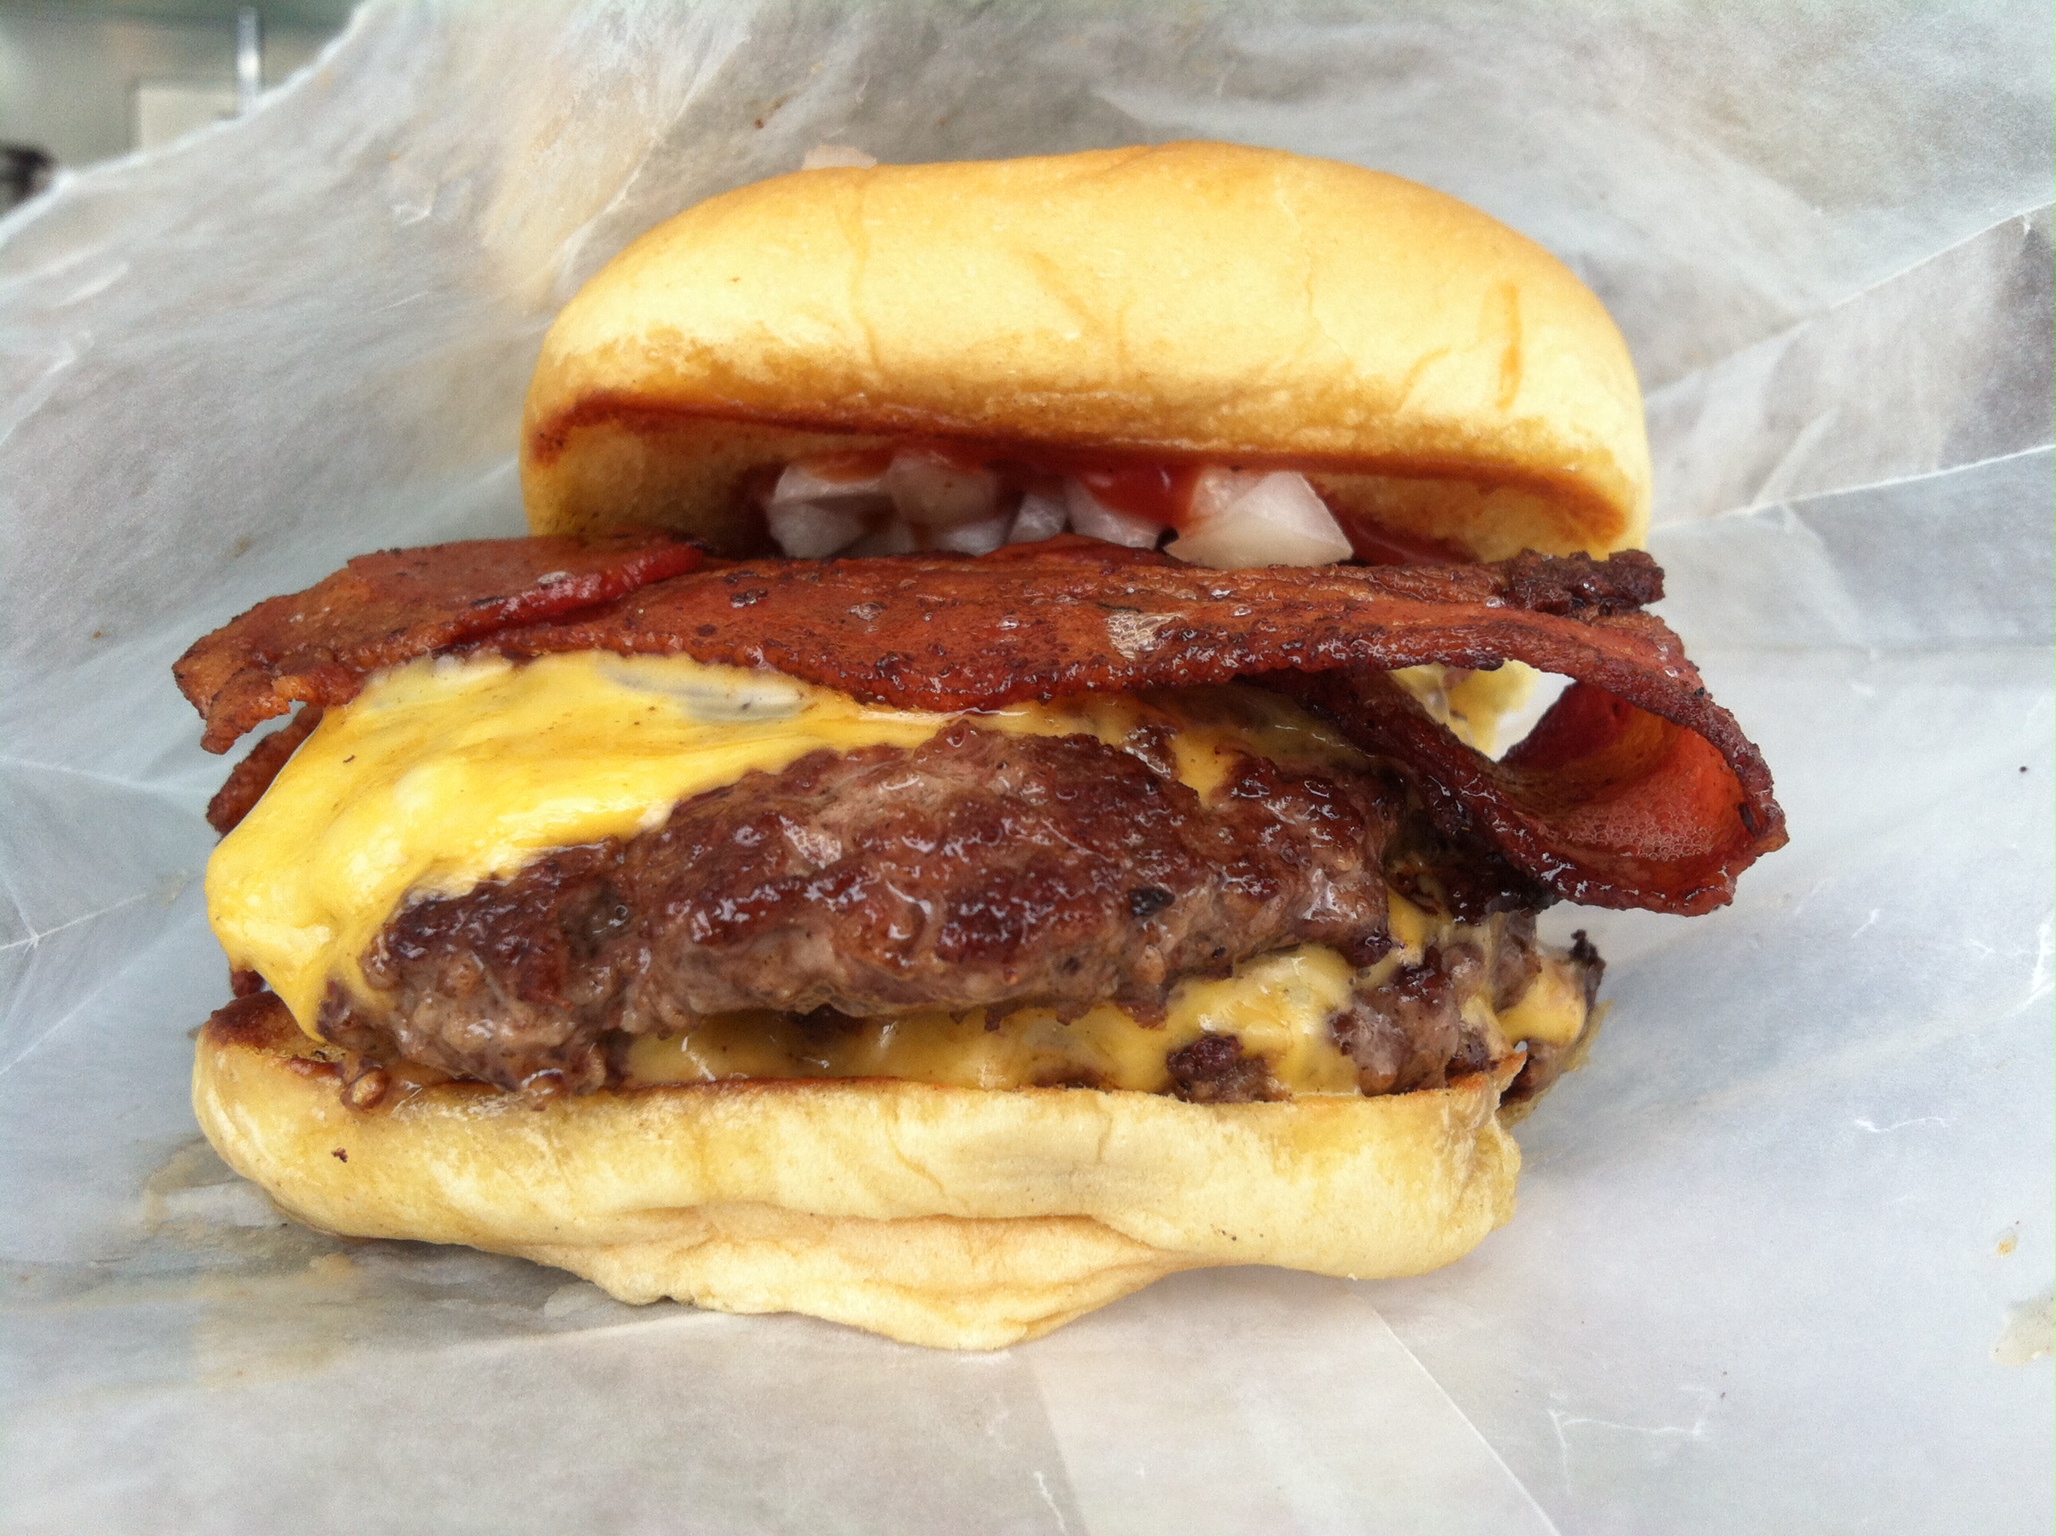 a cheeseburger with bacon sitting in a bun